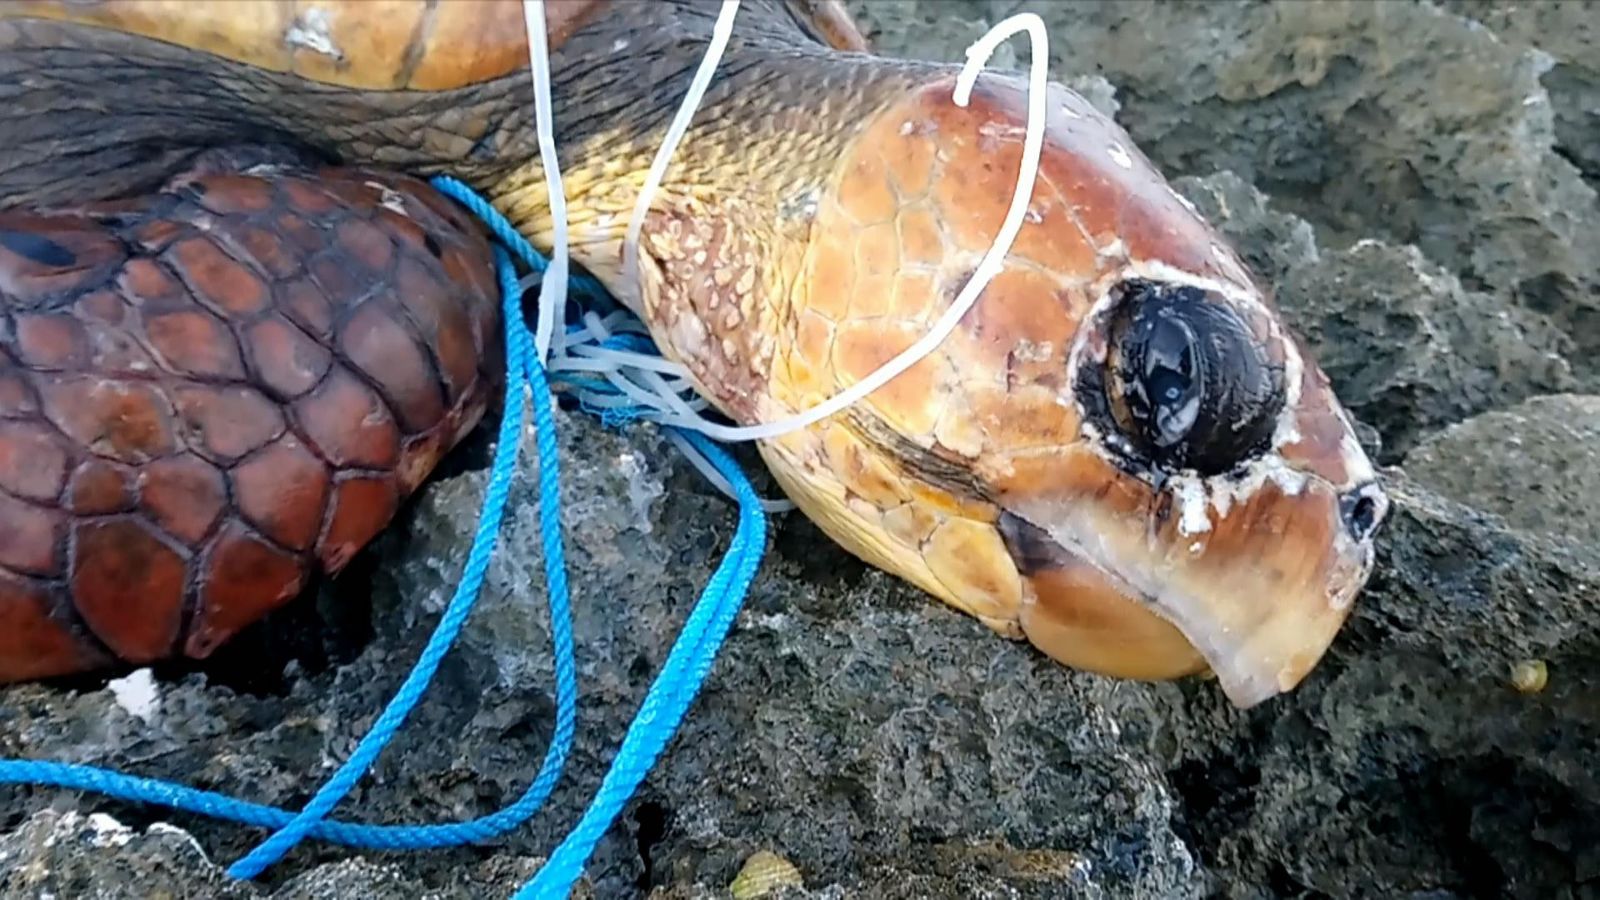 Endangered turtle tangled up in plastic | World News | Sky News